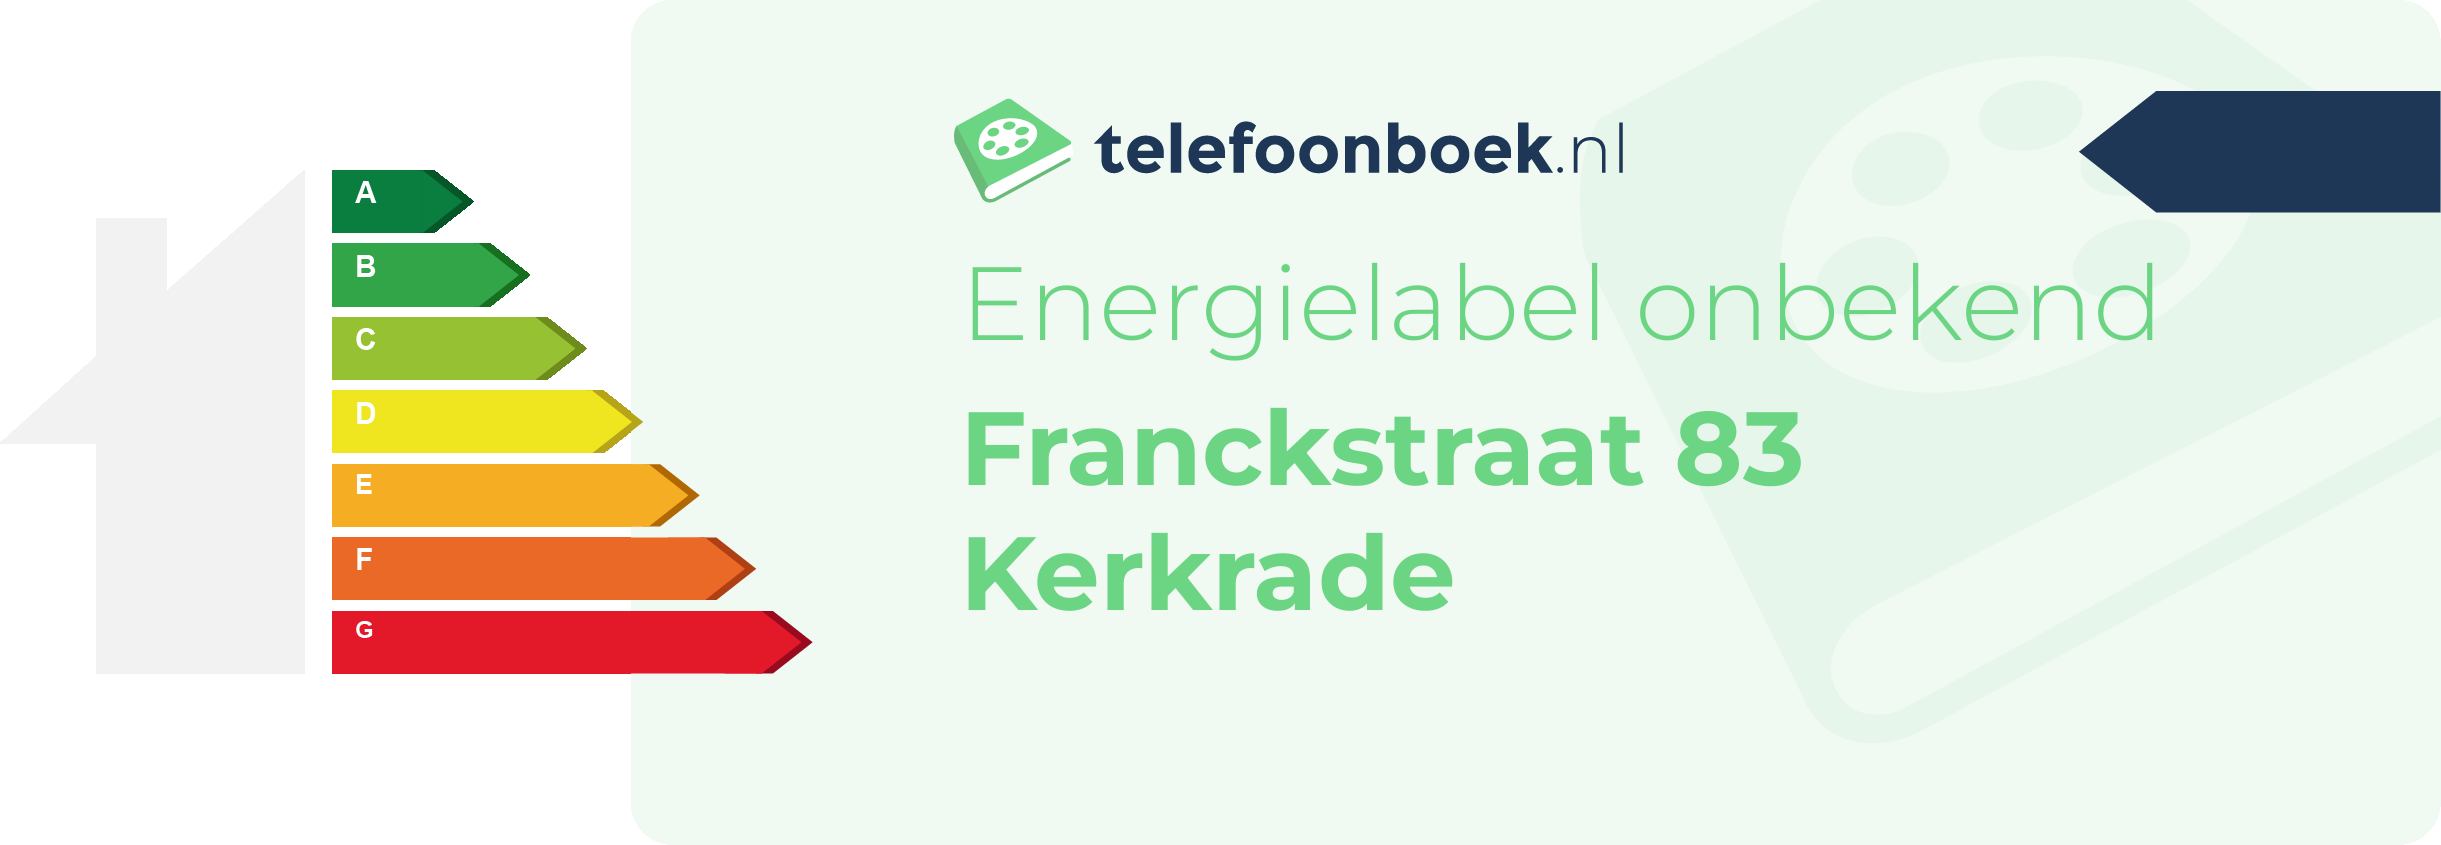 Energielabel Franckstraat 83 Kerkrade